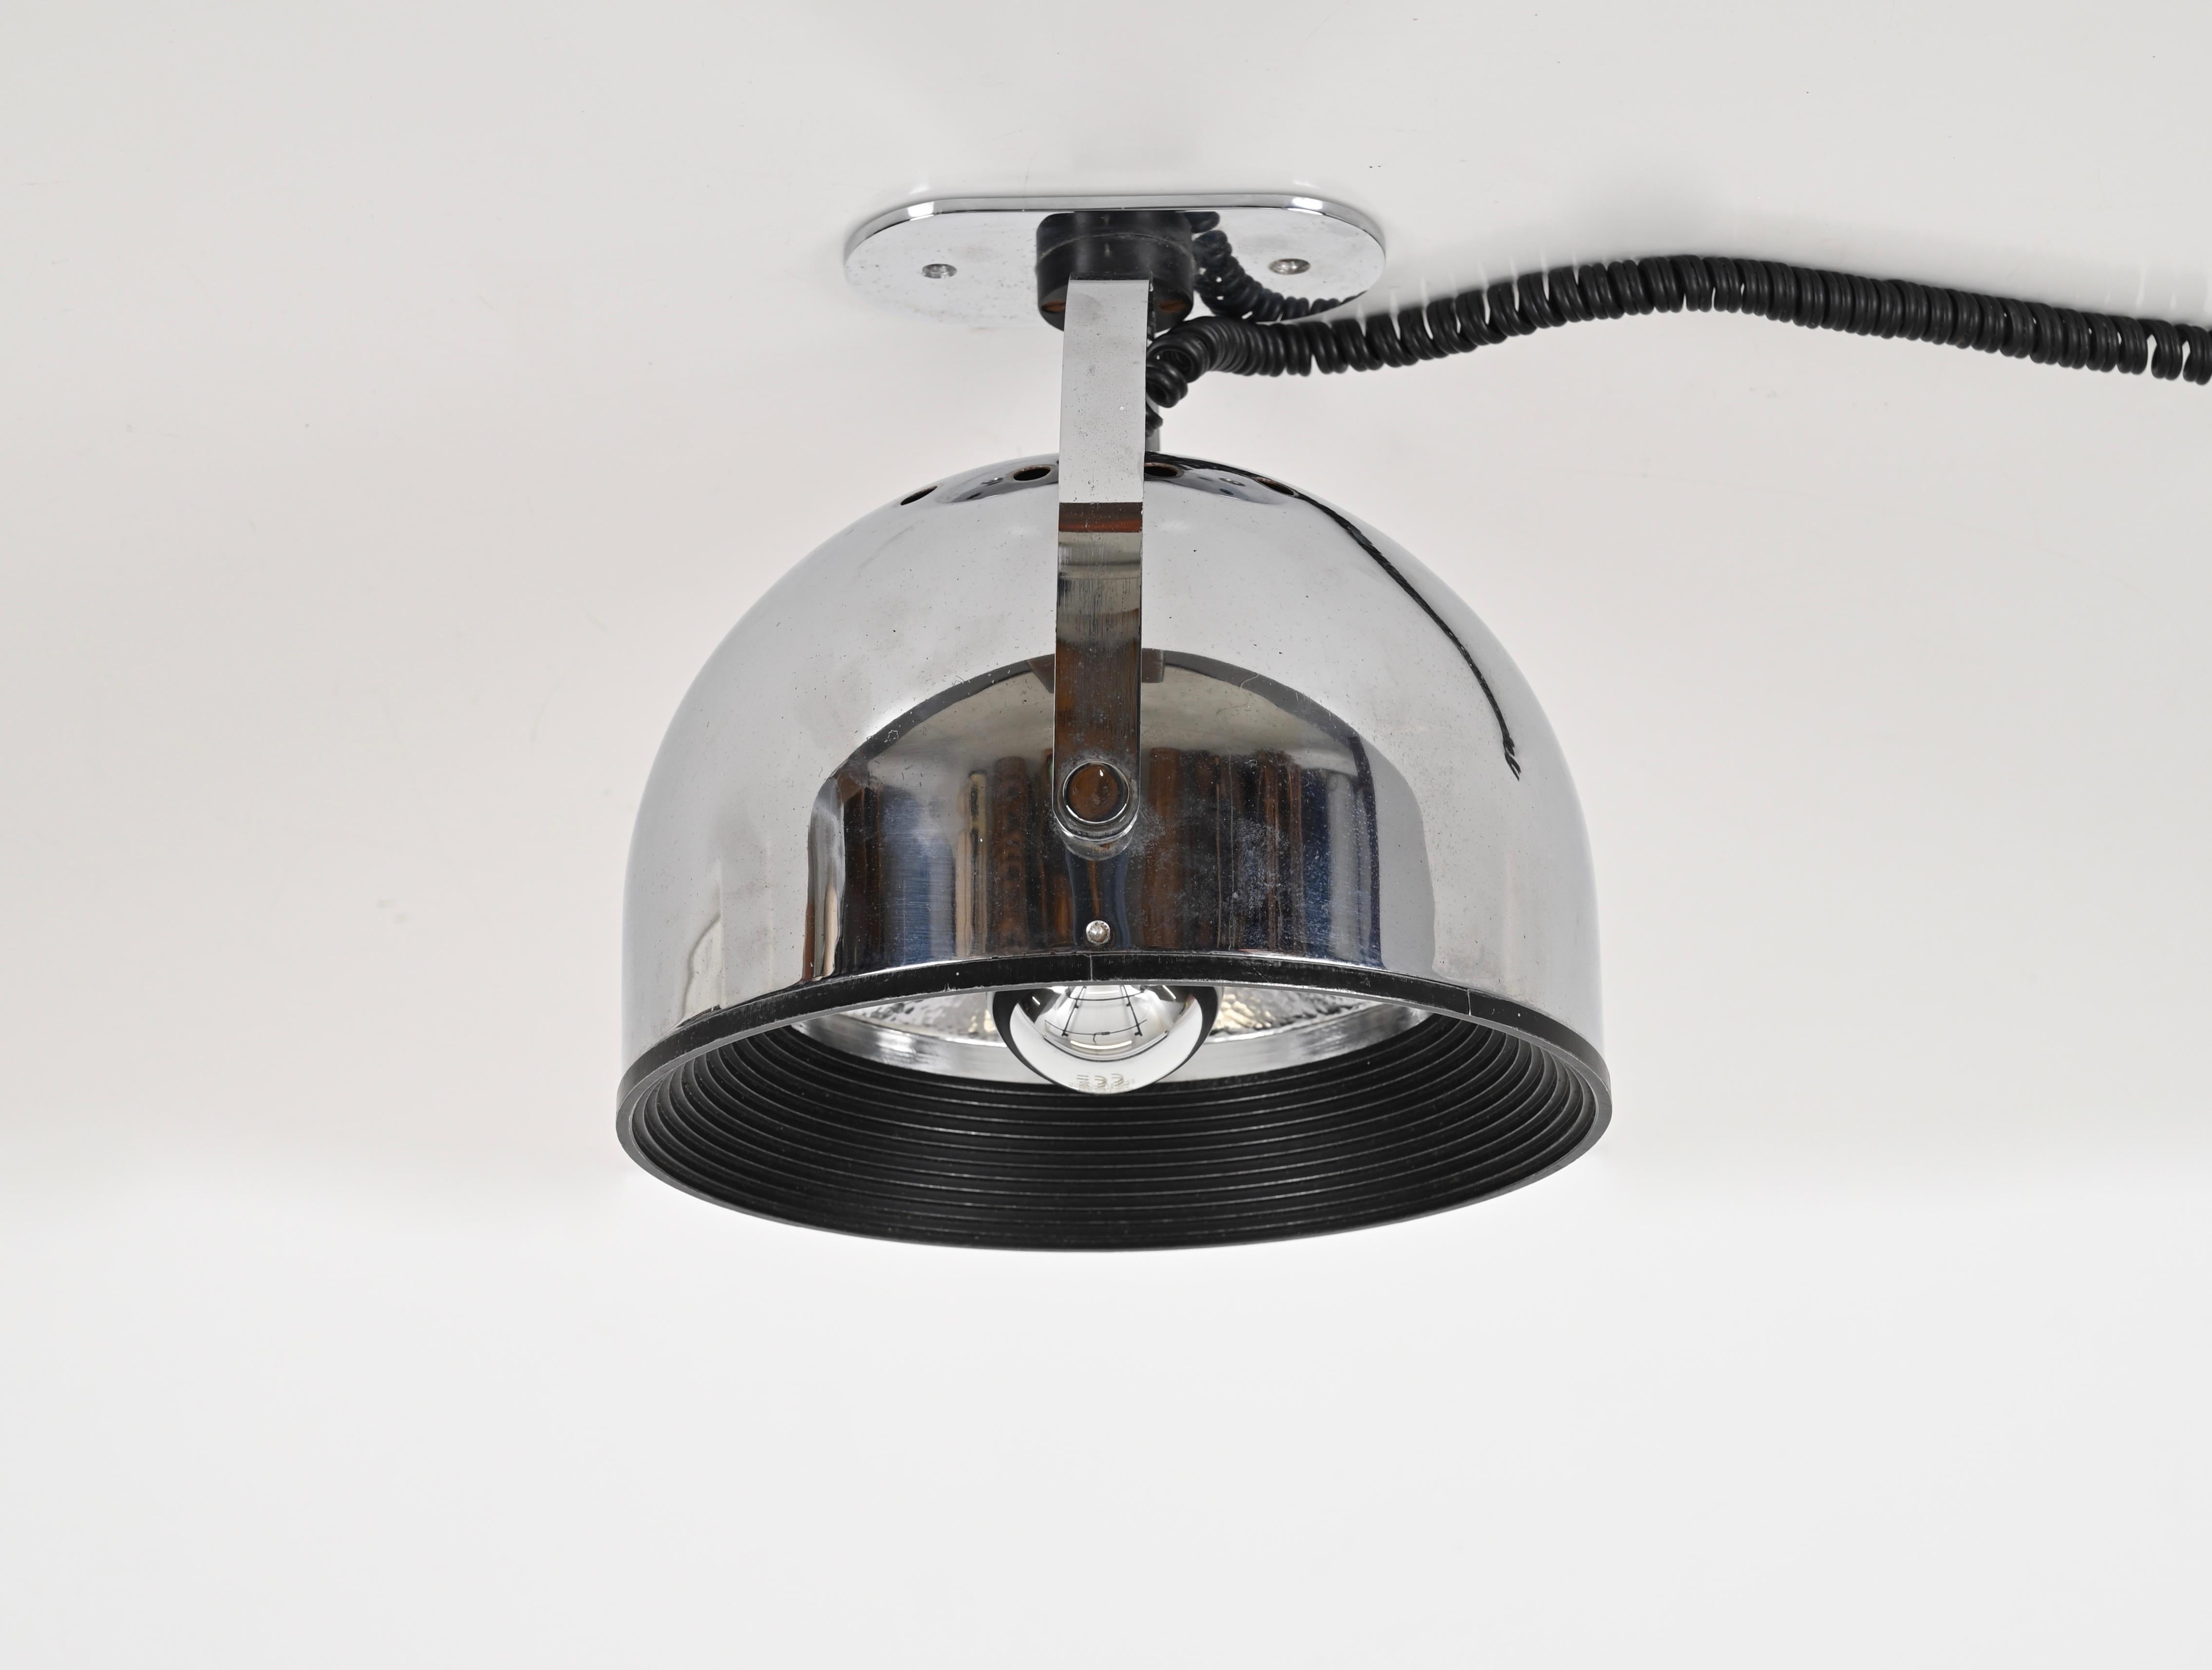 Enameled Mid-Century Spot Lamp in Chrome by Gae Aulenti for Stilnovo, Italy 1970s For Sale